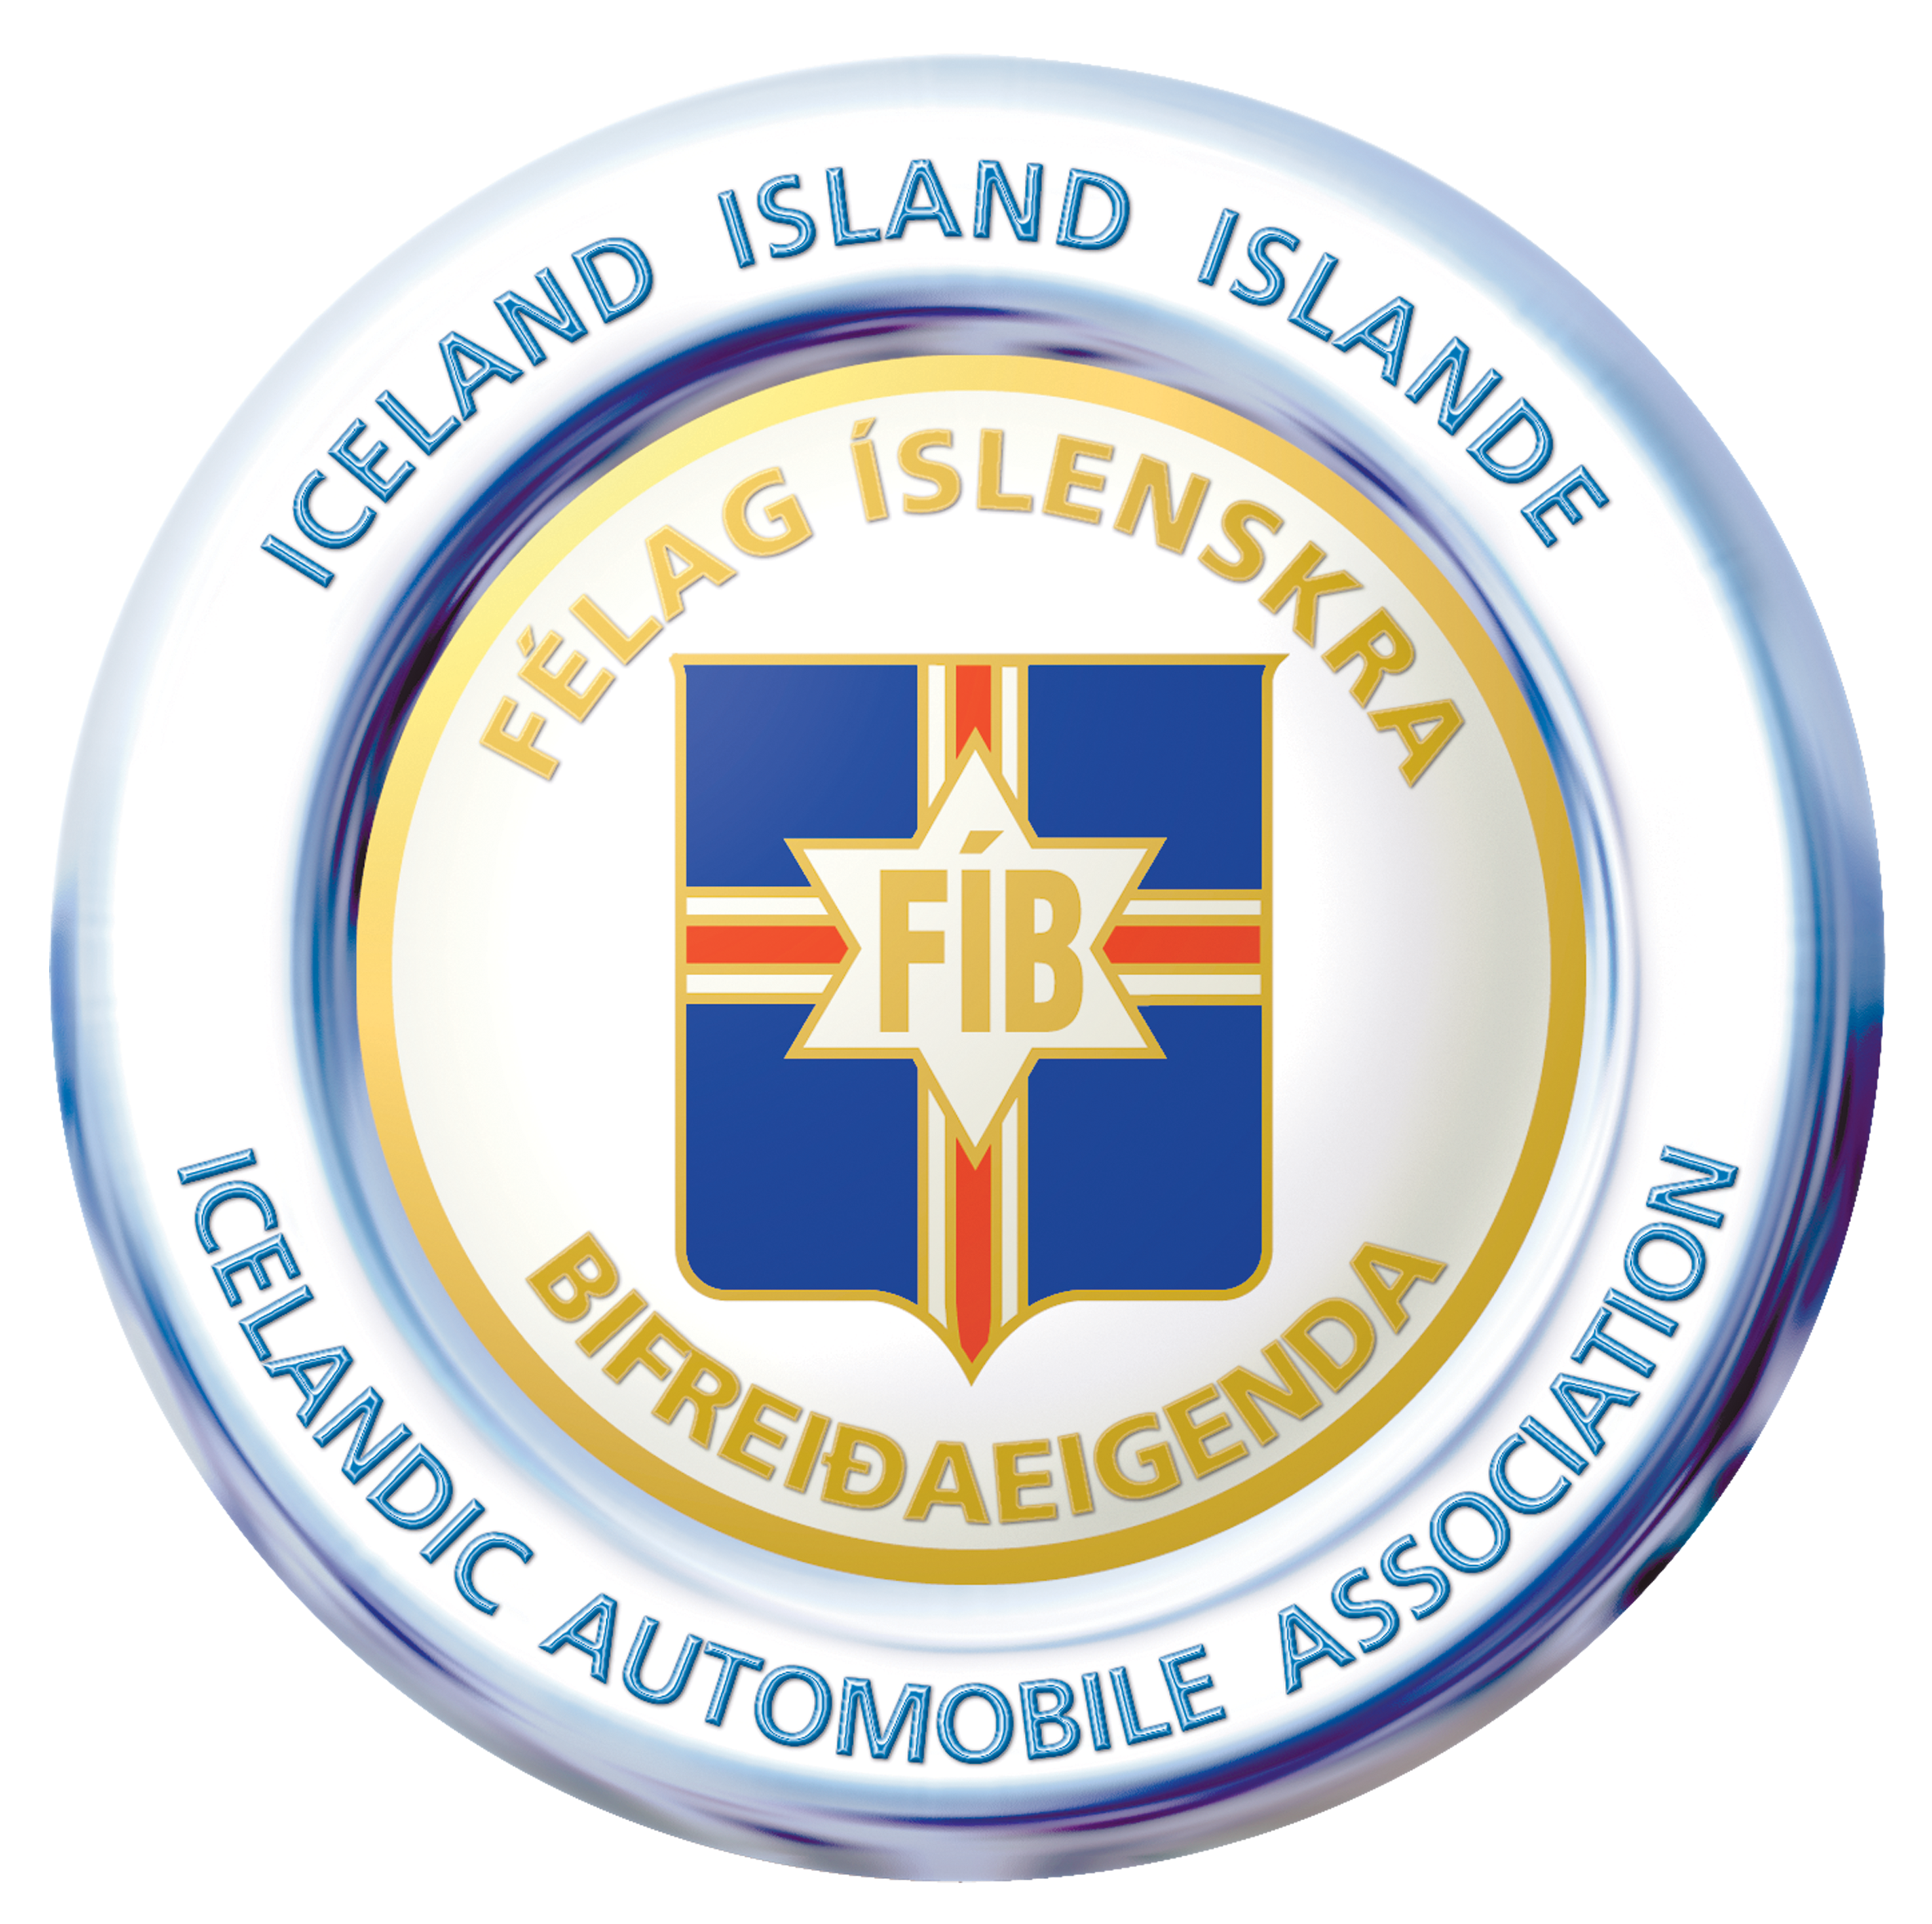 Icelandic Automobile Association